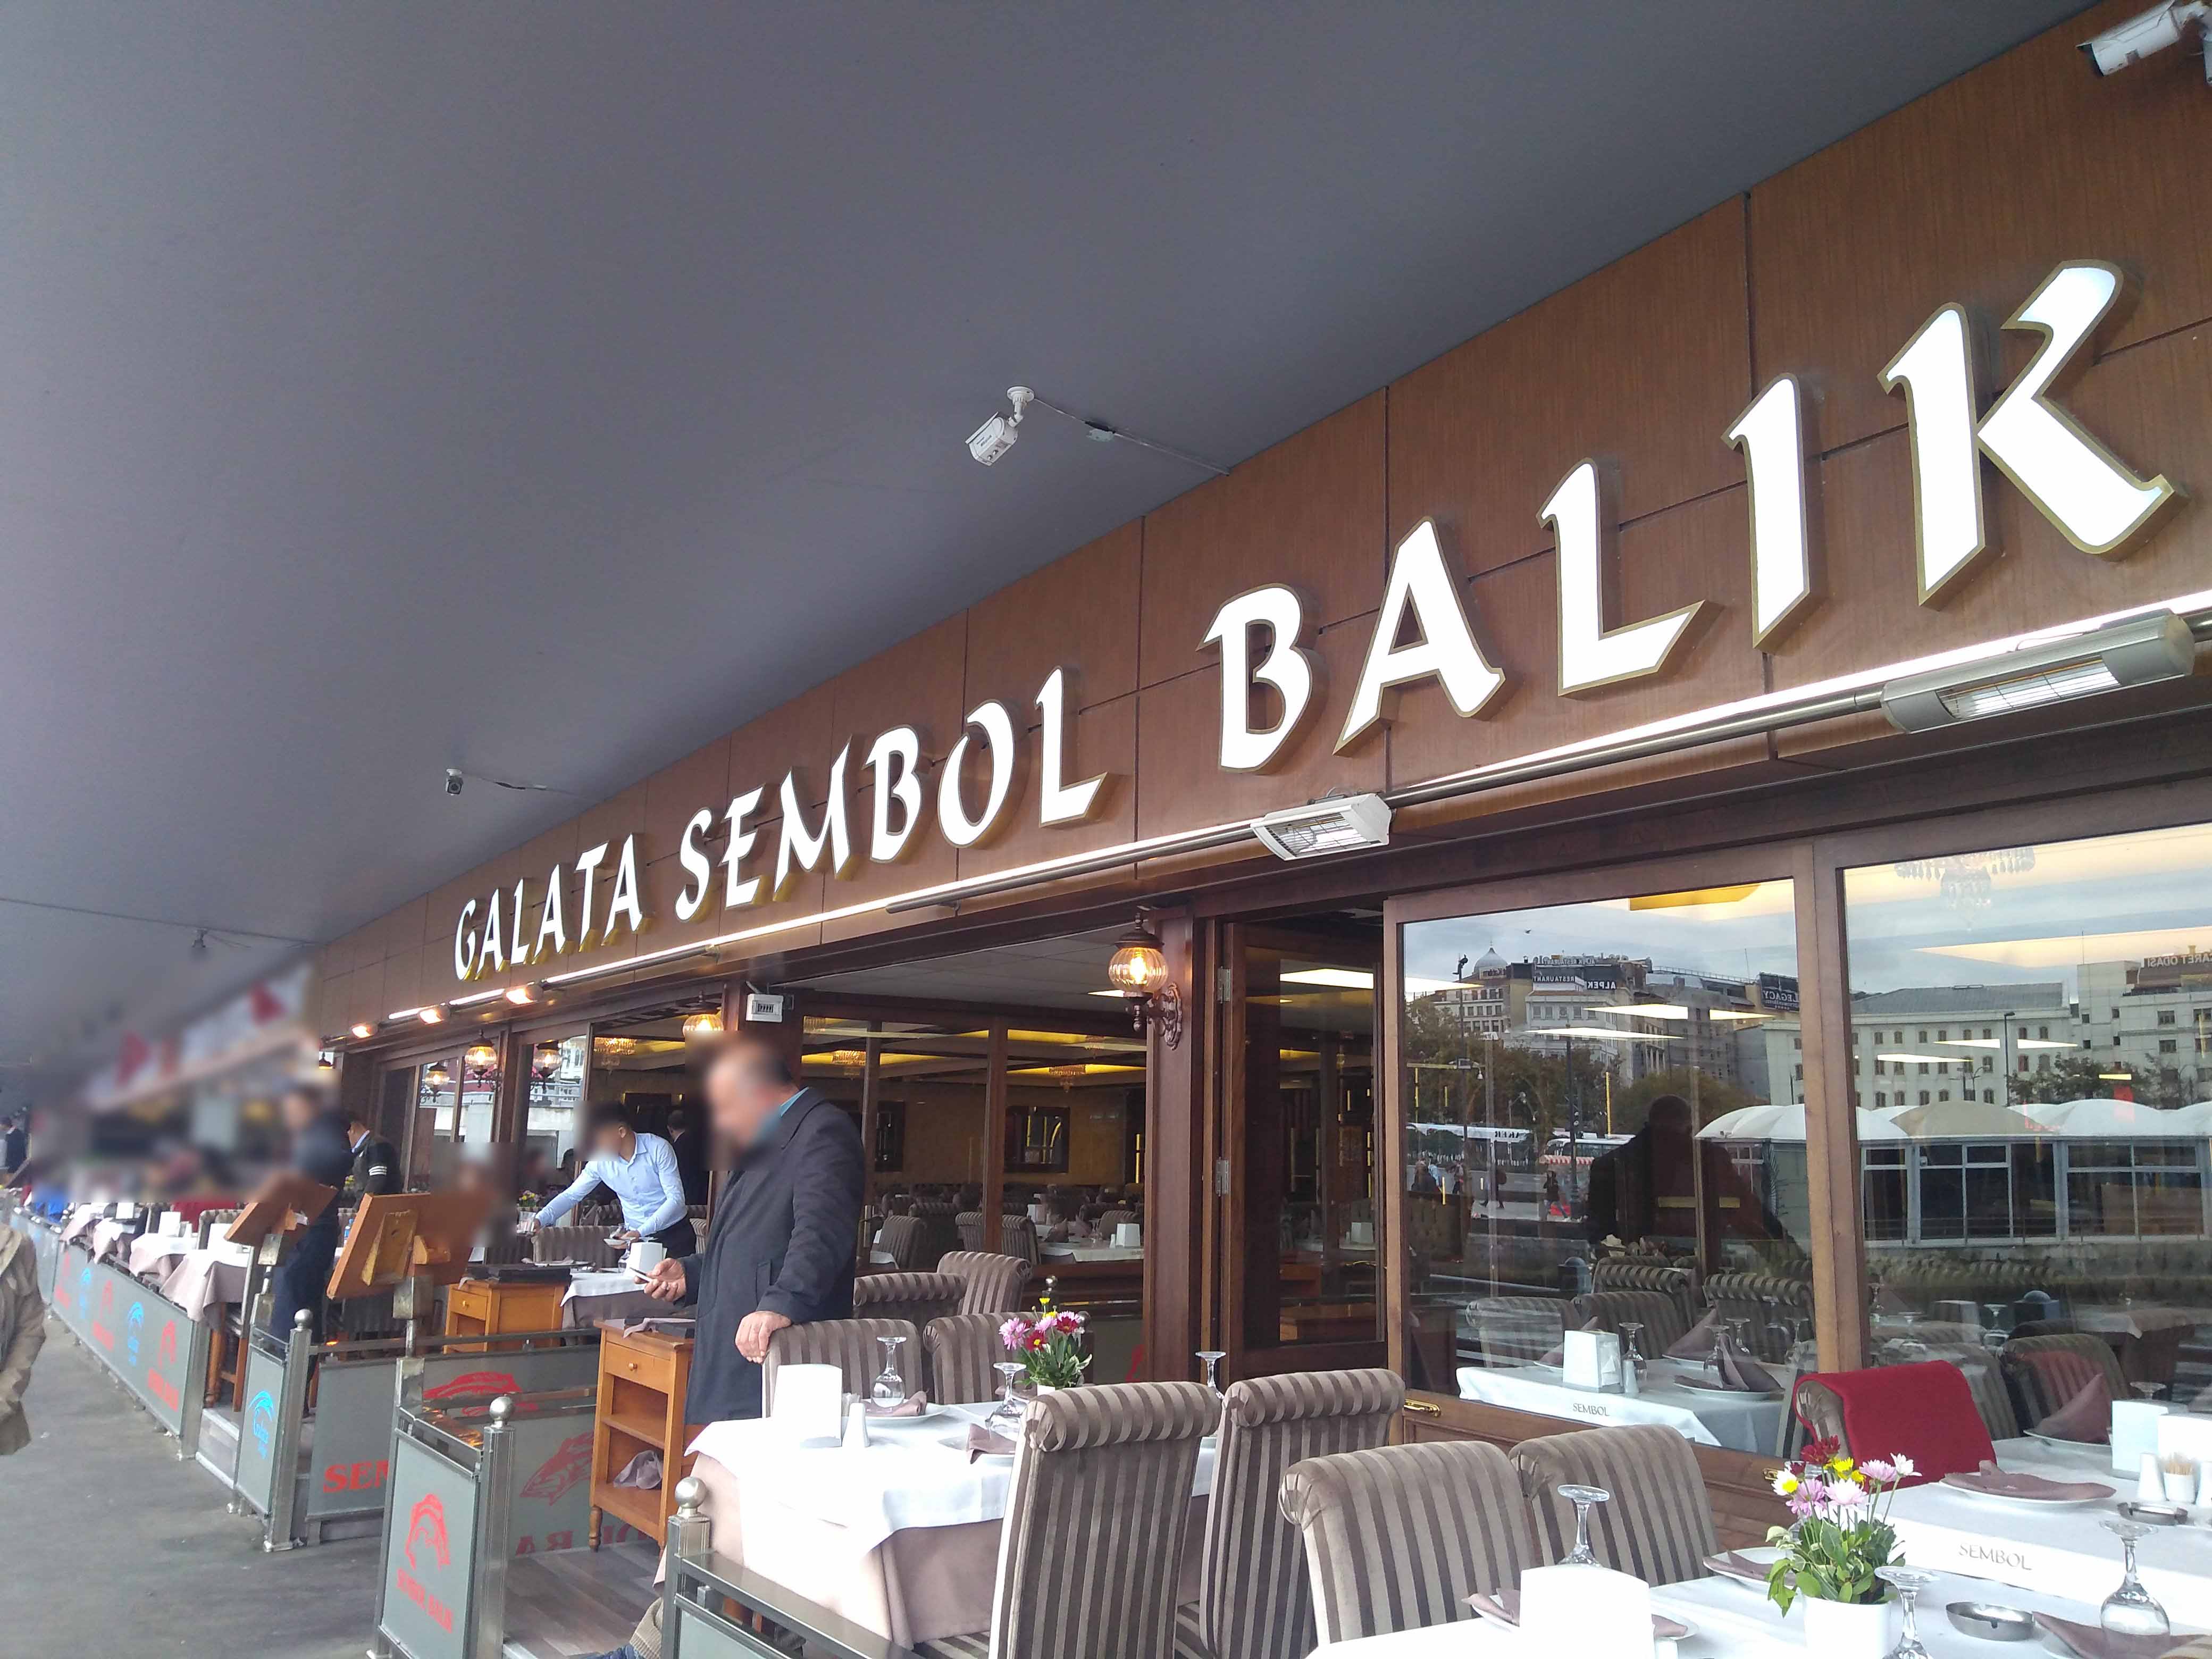 Galata Sembol Balik Restaurant Eminonu Merkez Istanbul